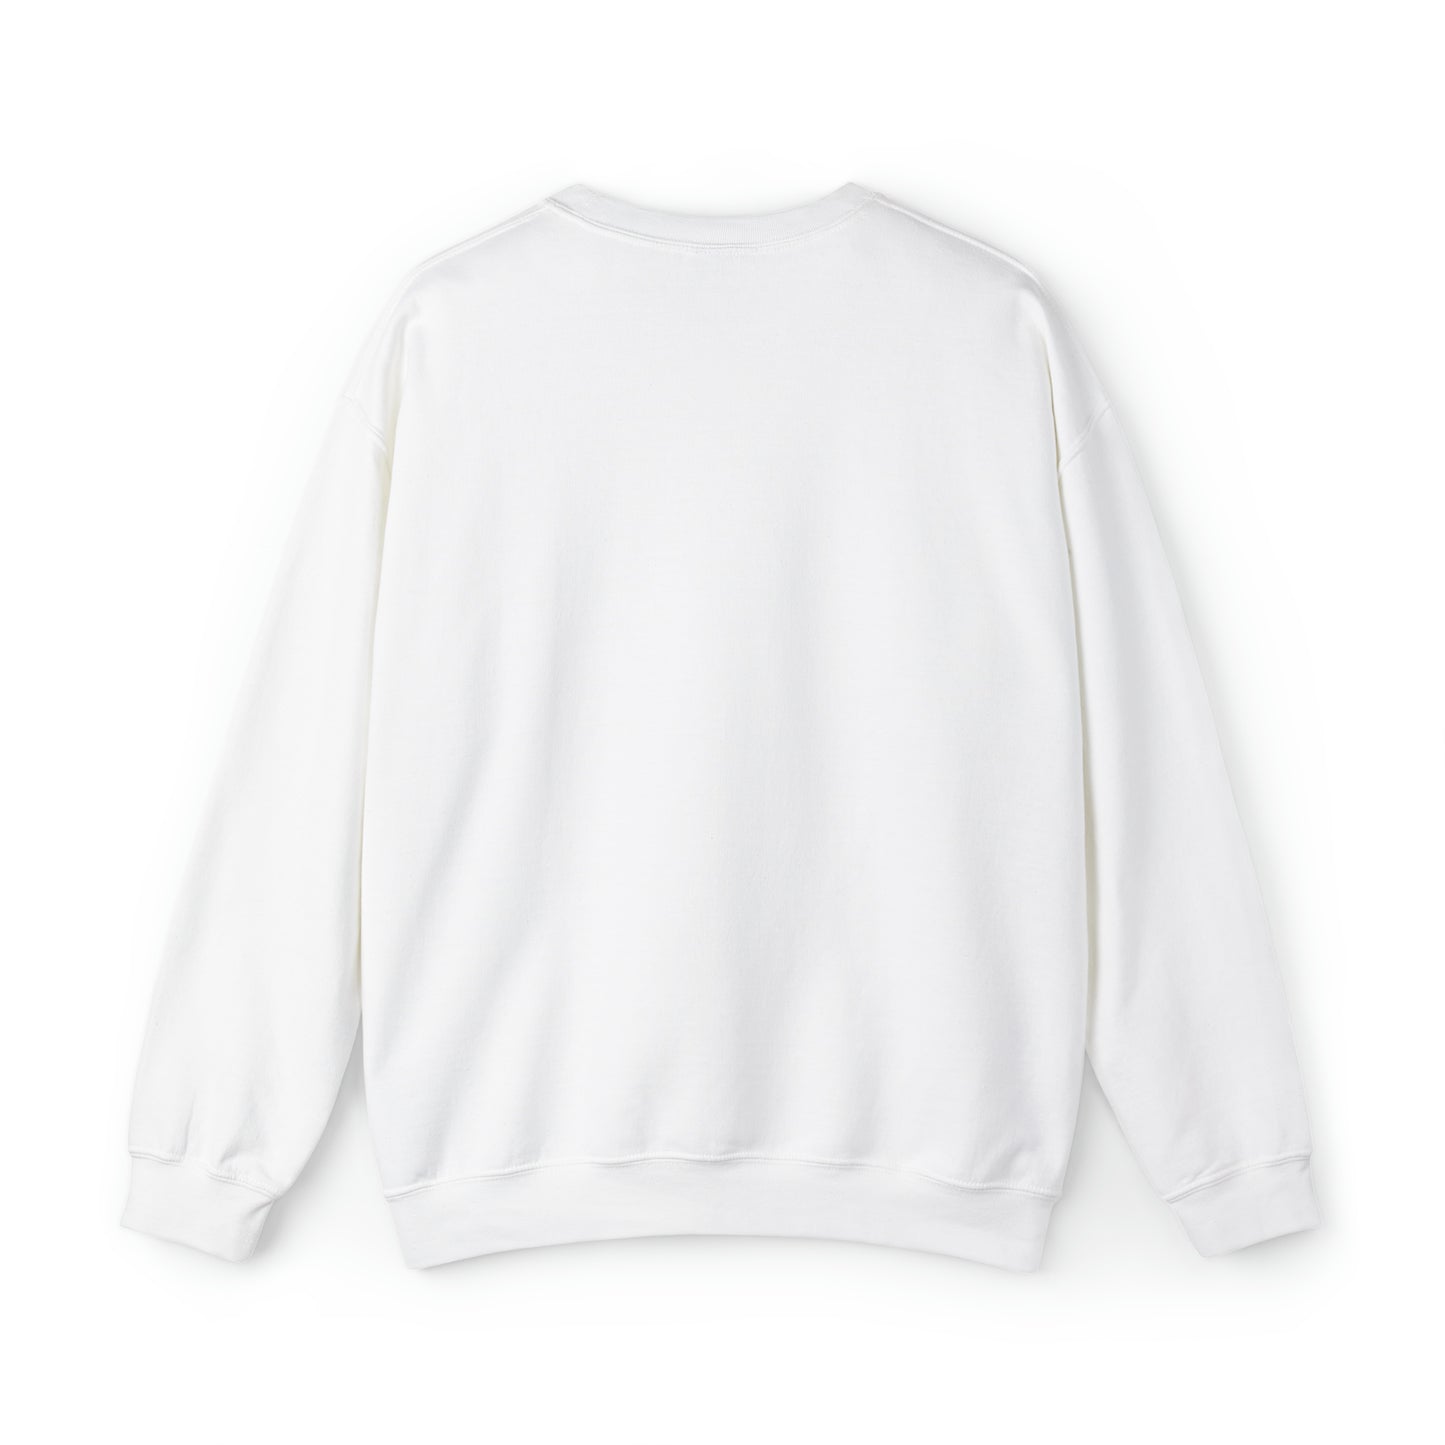 Donald Trump Sweatshirt Make Halloween Great Again Men's Women's Black Grey White Small Medium Large XL XXL XXL Halloween Sweatshirts